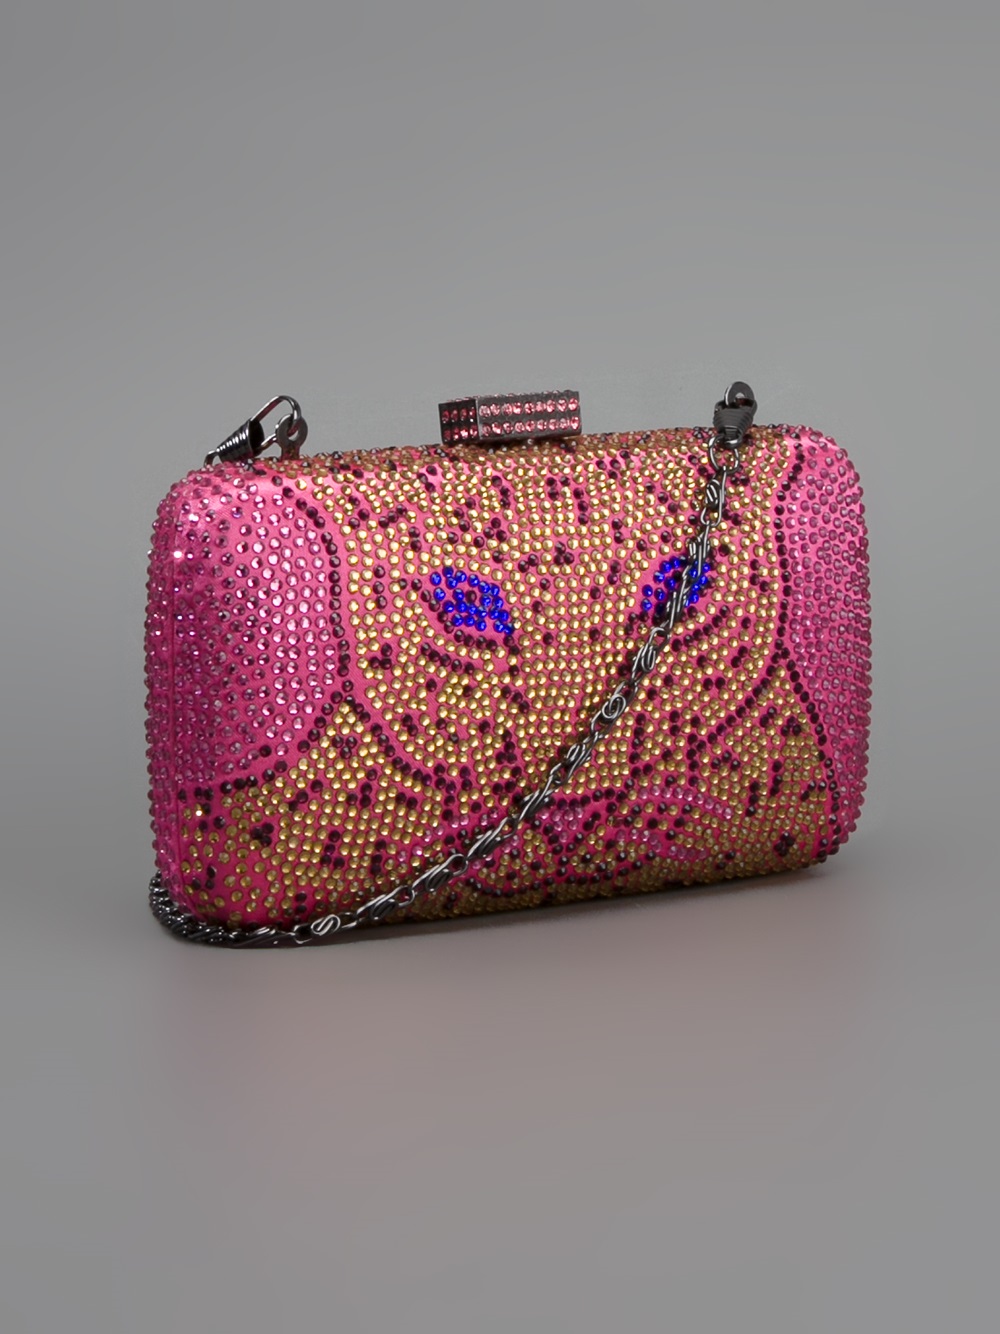 Lyst - Serpui Jewel Embellished Box Clutch in Pink